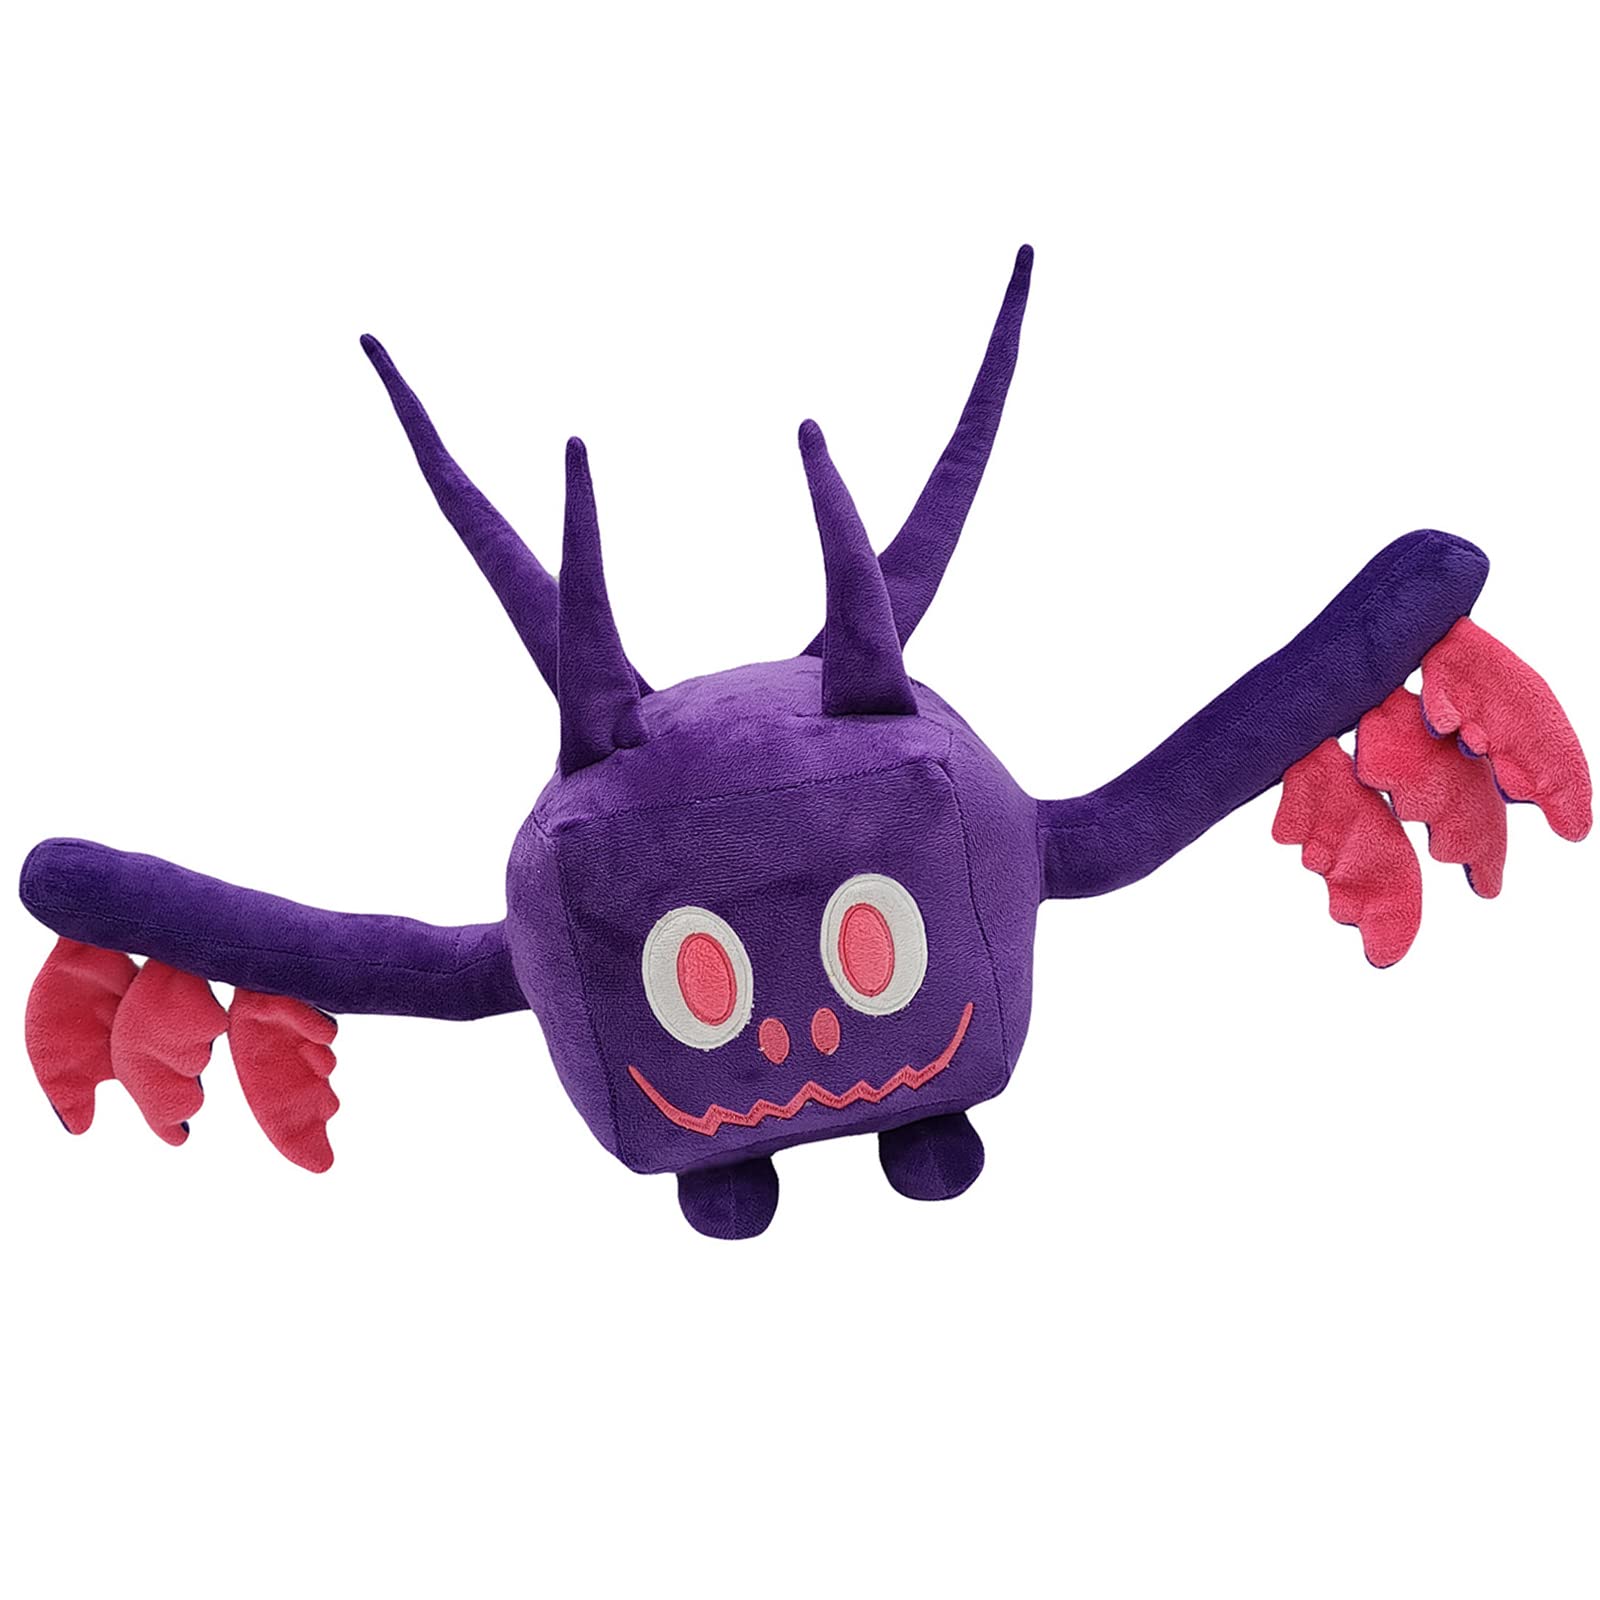 Purple Bat Stuffed Animal Cute Kawaii Soft Toy for Kids and Fans